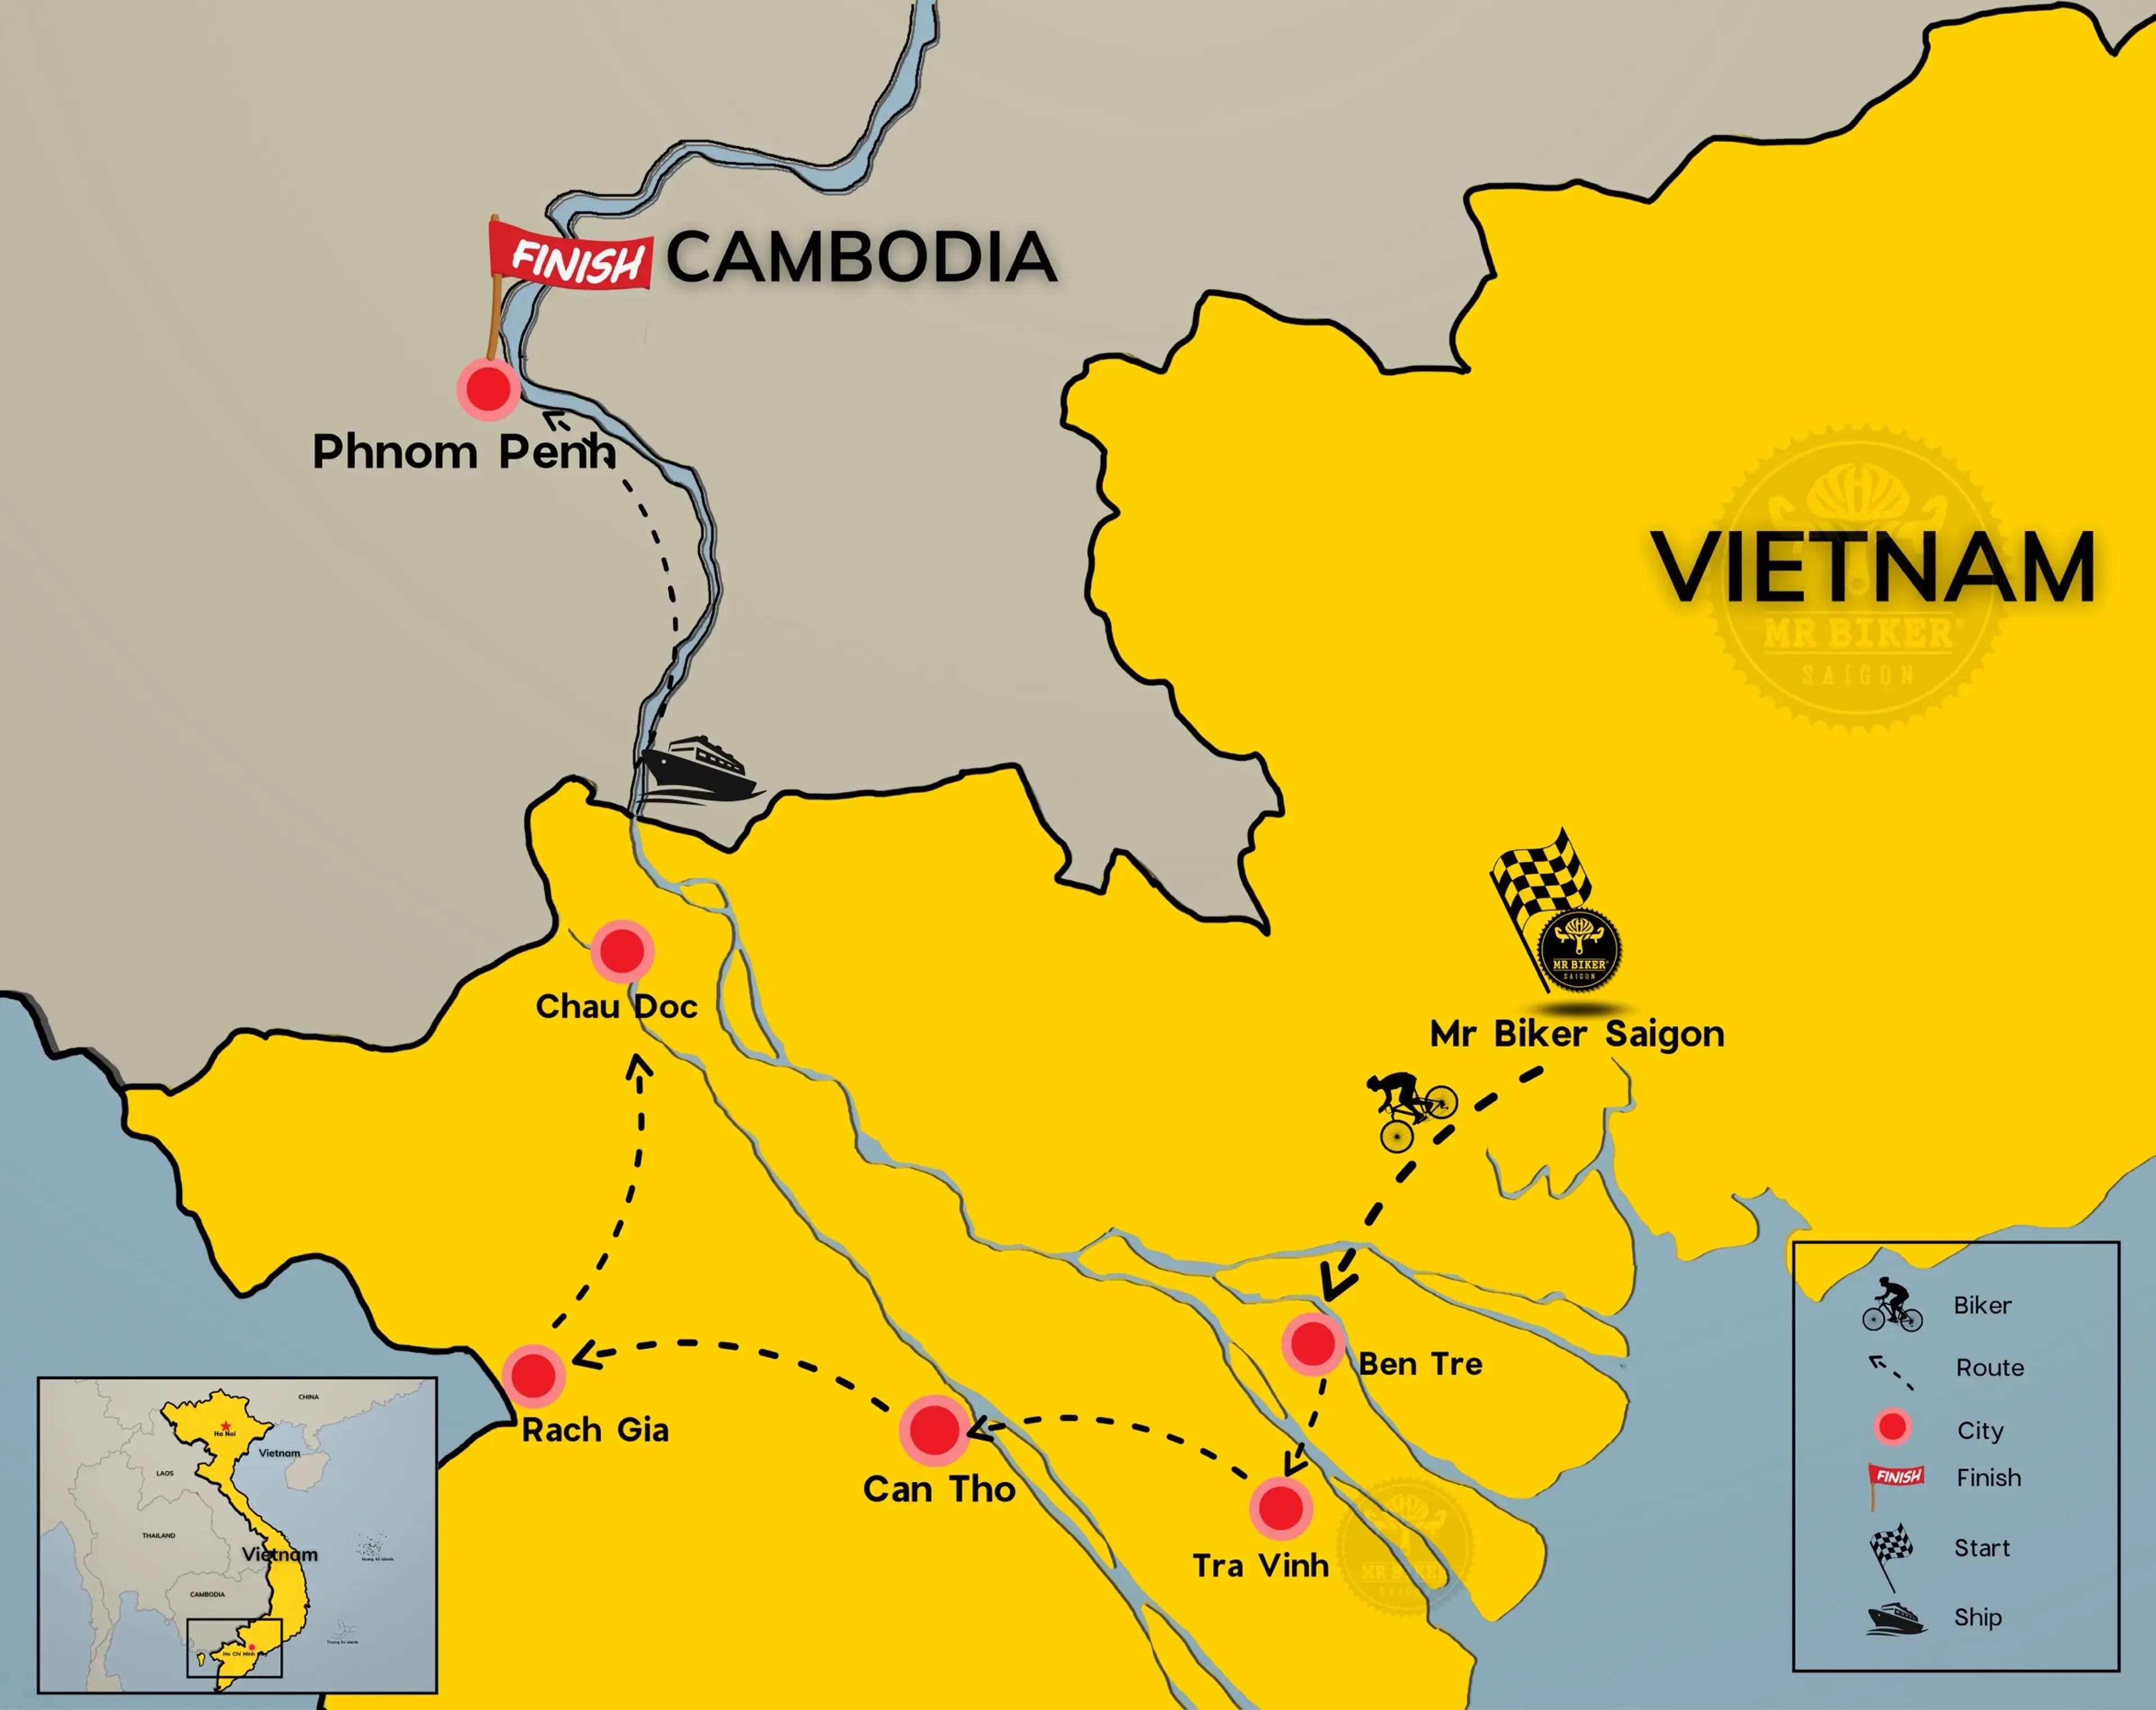 Mr Biker Saigon, Mekogn Delta to Cambodia Cycling Route